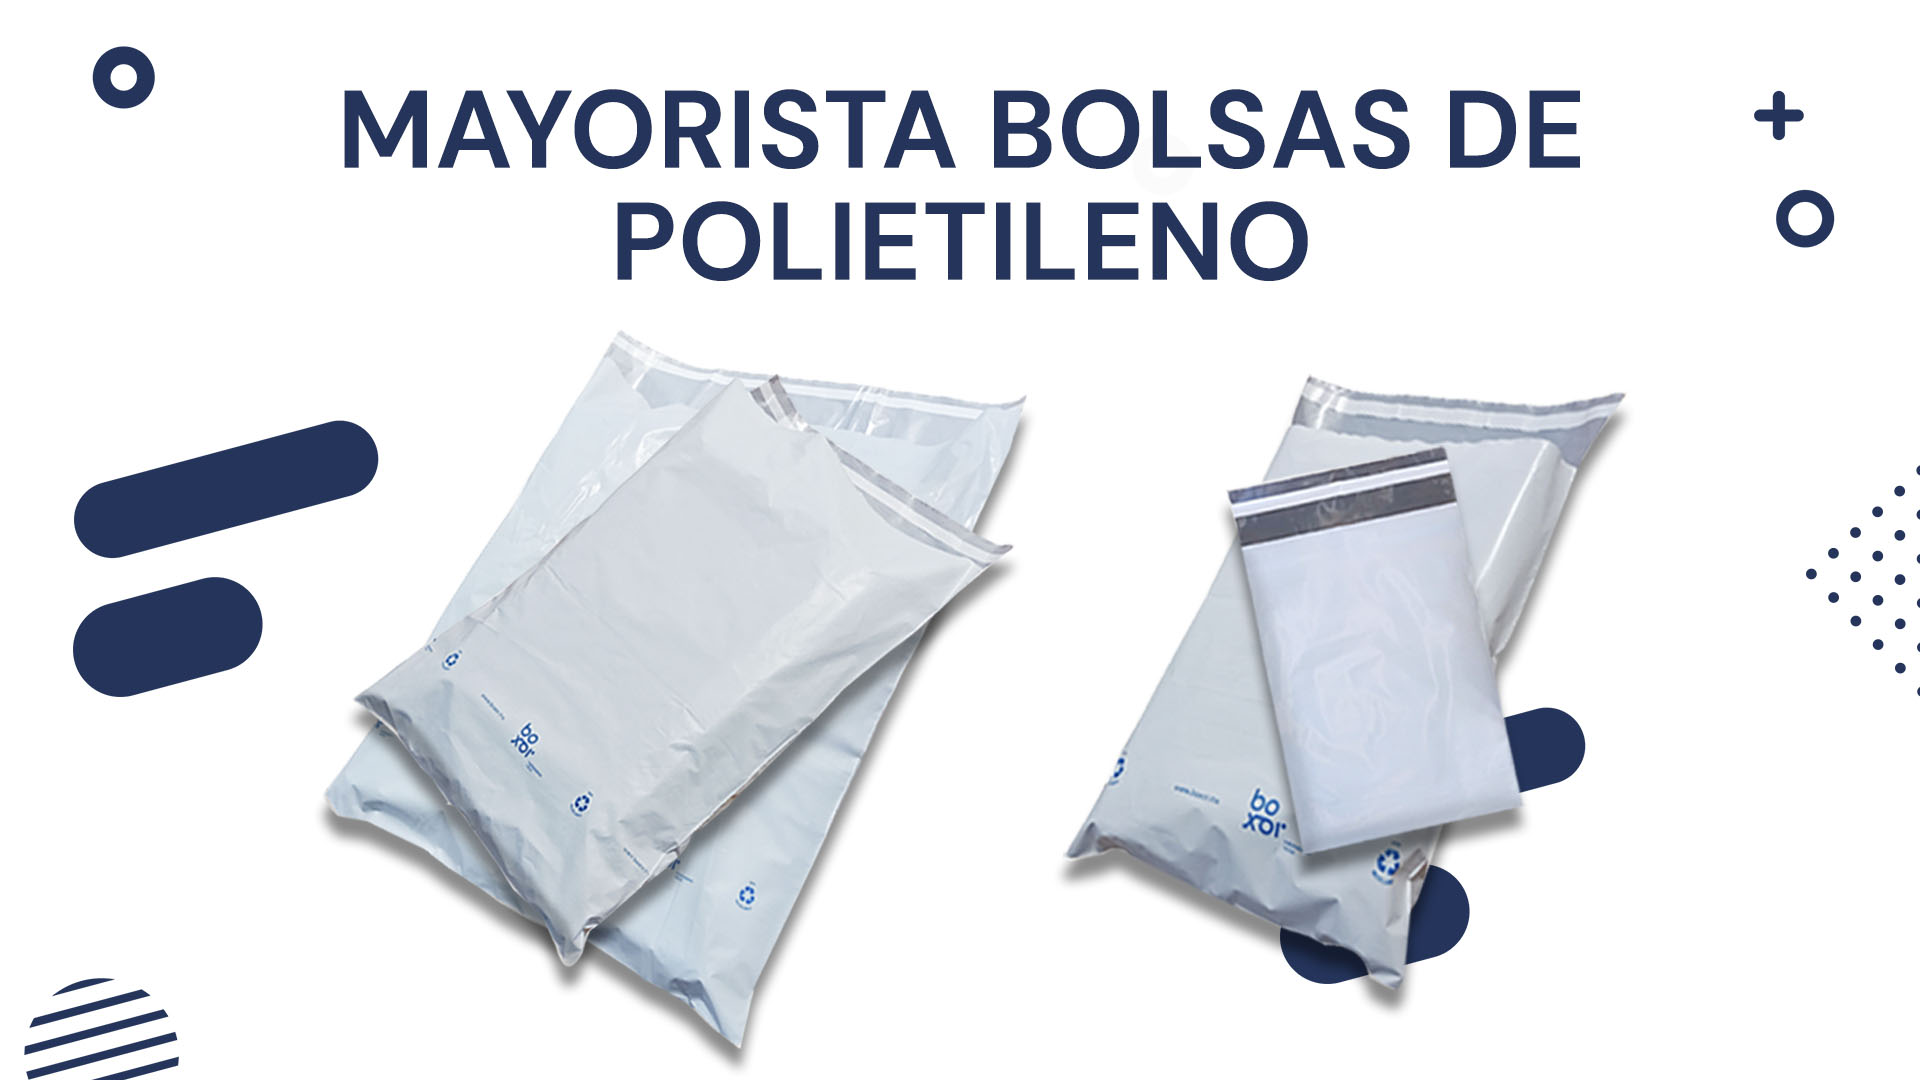 Mayorista bolsas de polietileno Mayorista bolsas de polietileno tipos - Boxor